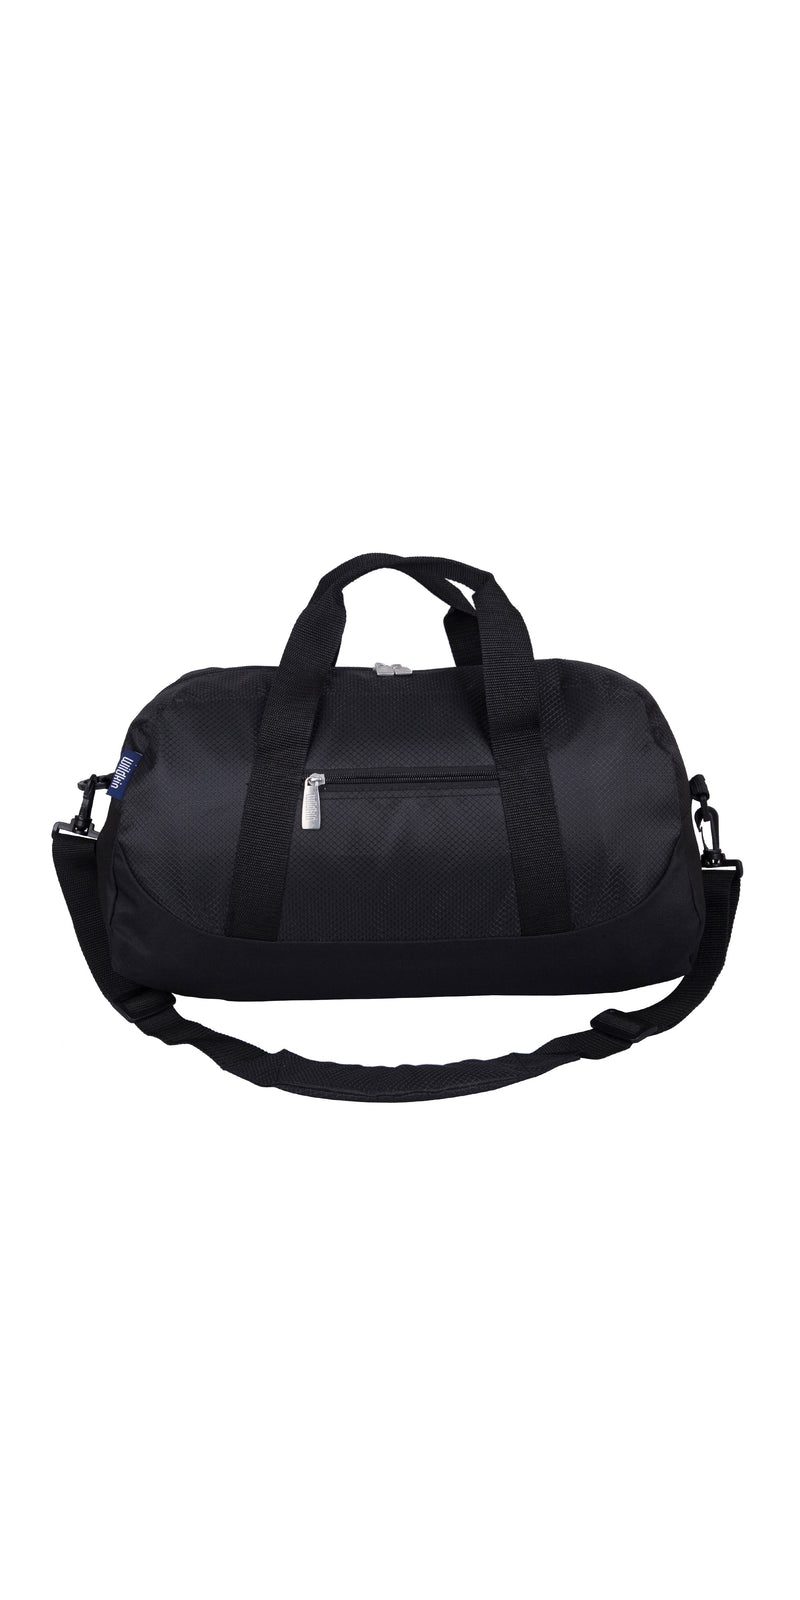 Wildkin Kids Best Overnighter Duffel Bag - Strong Suitcases-Vegan Luggage